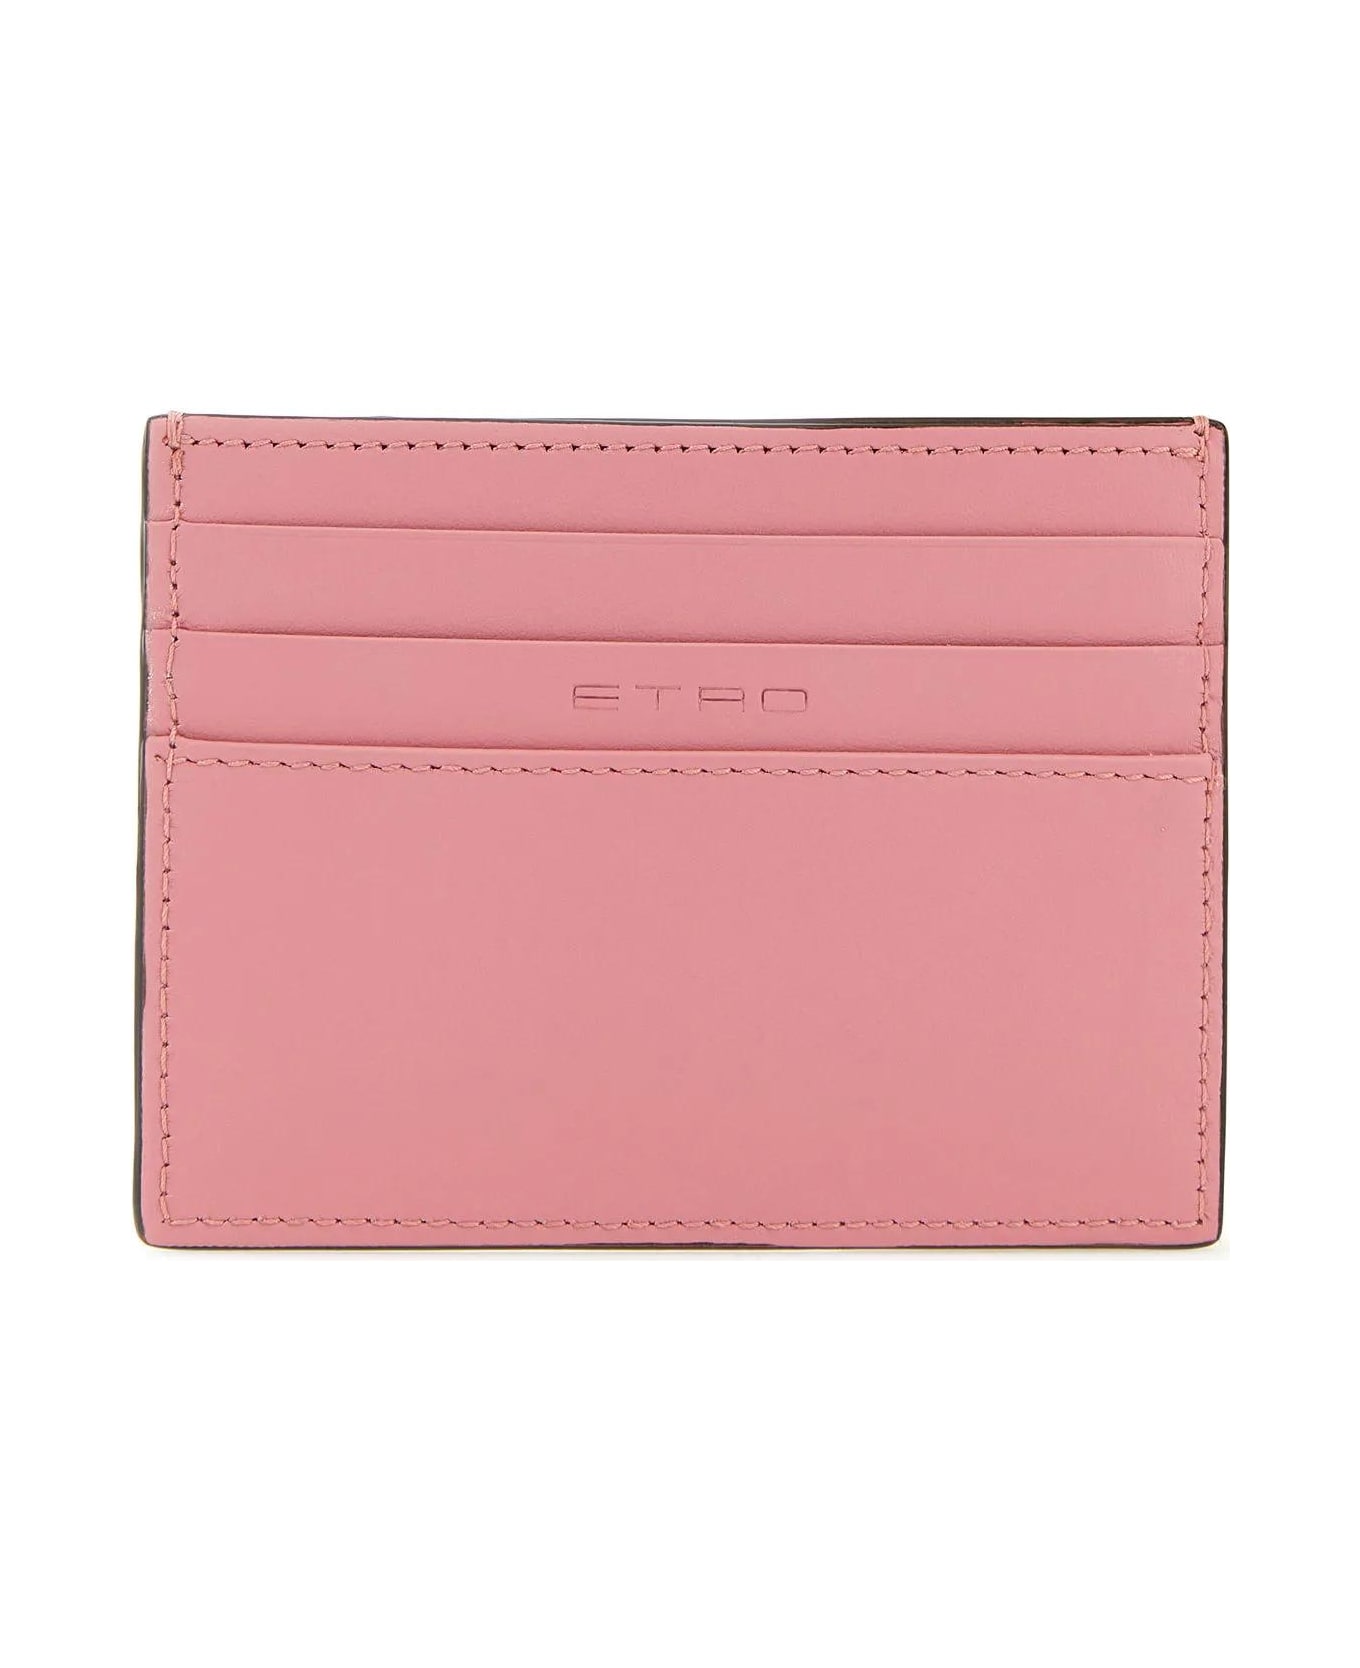 Etro Pink Leather Cardholder - Pink